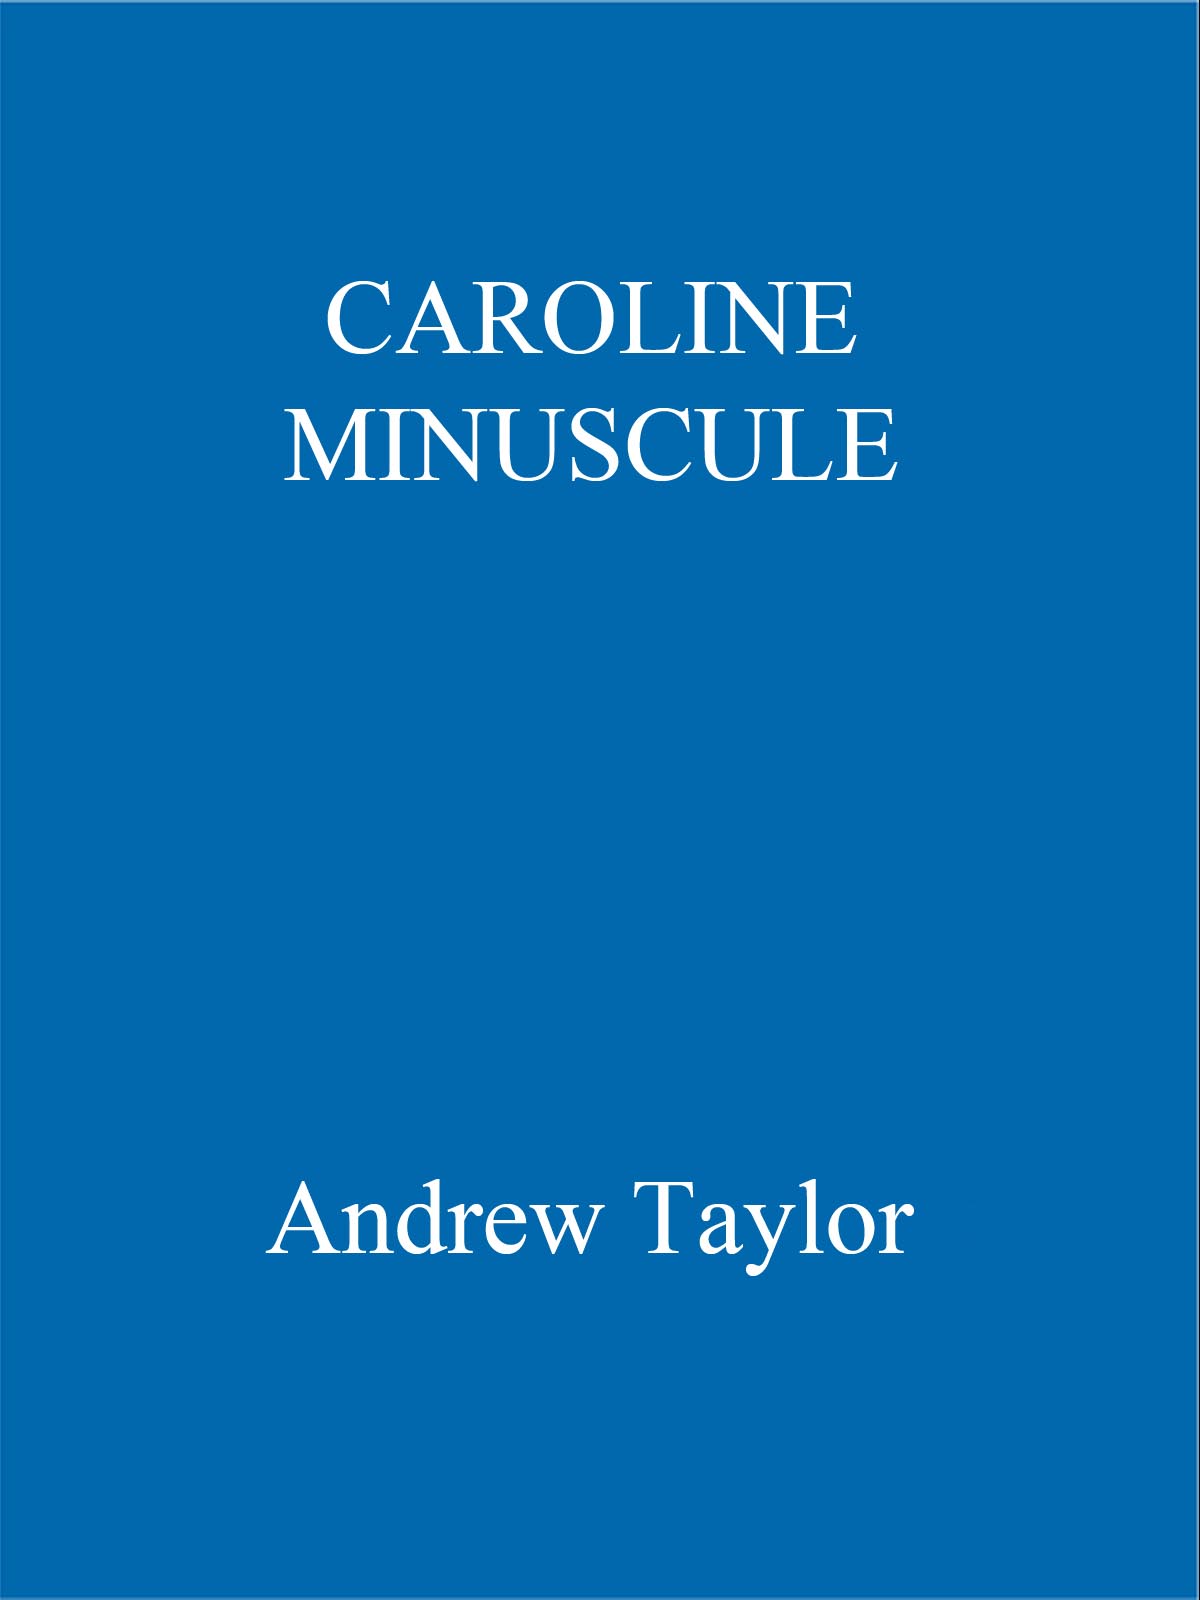 Caroline Minuscule (2012) by Andrew Taylor